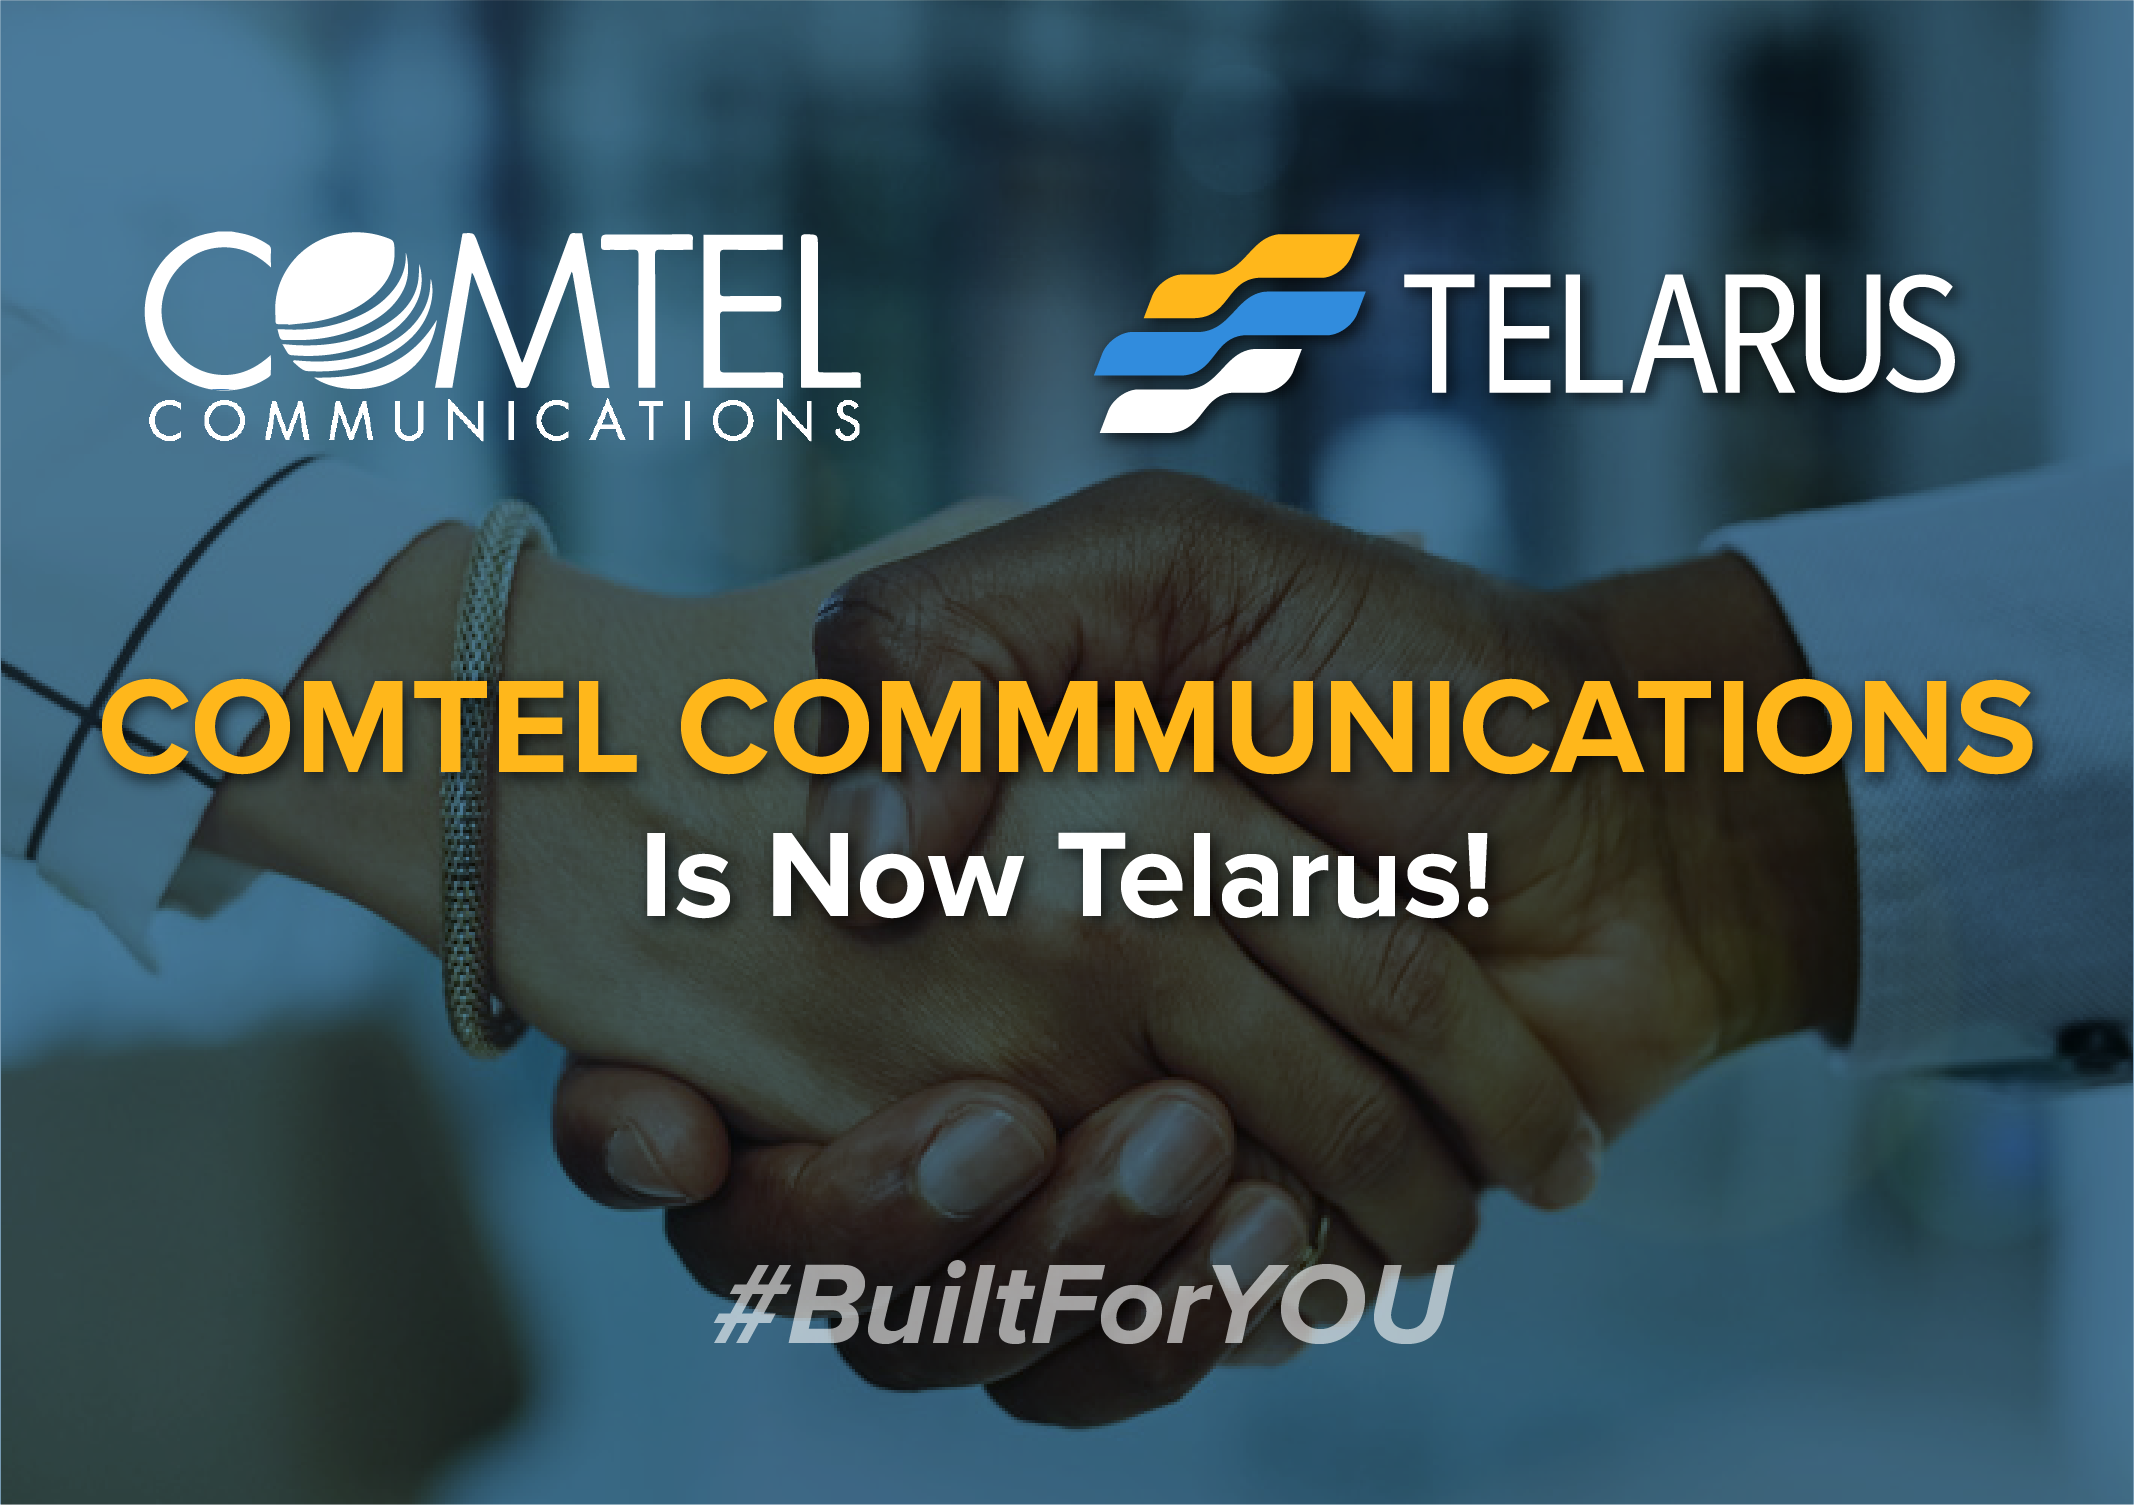 TELARUS ANNOUNCES ACQUISITION OF COMTEL COMMUNICATIONS, A MASTER AGENT